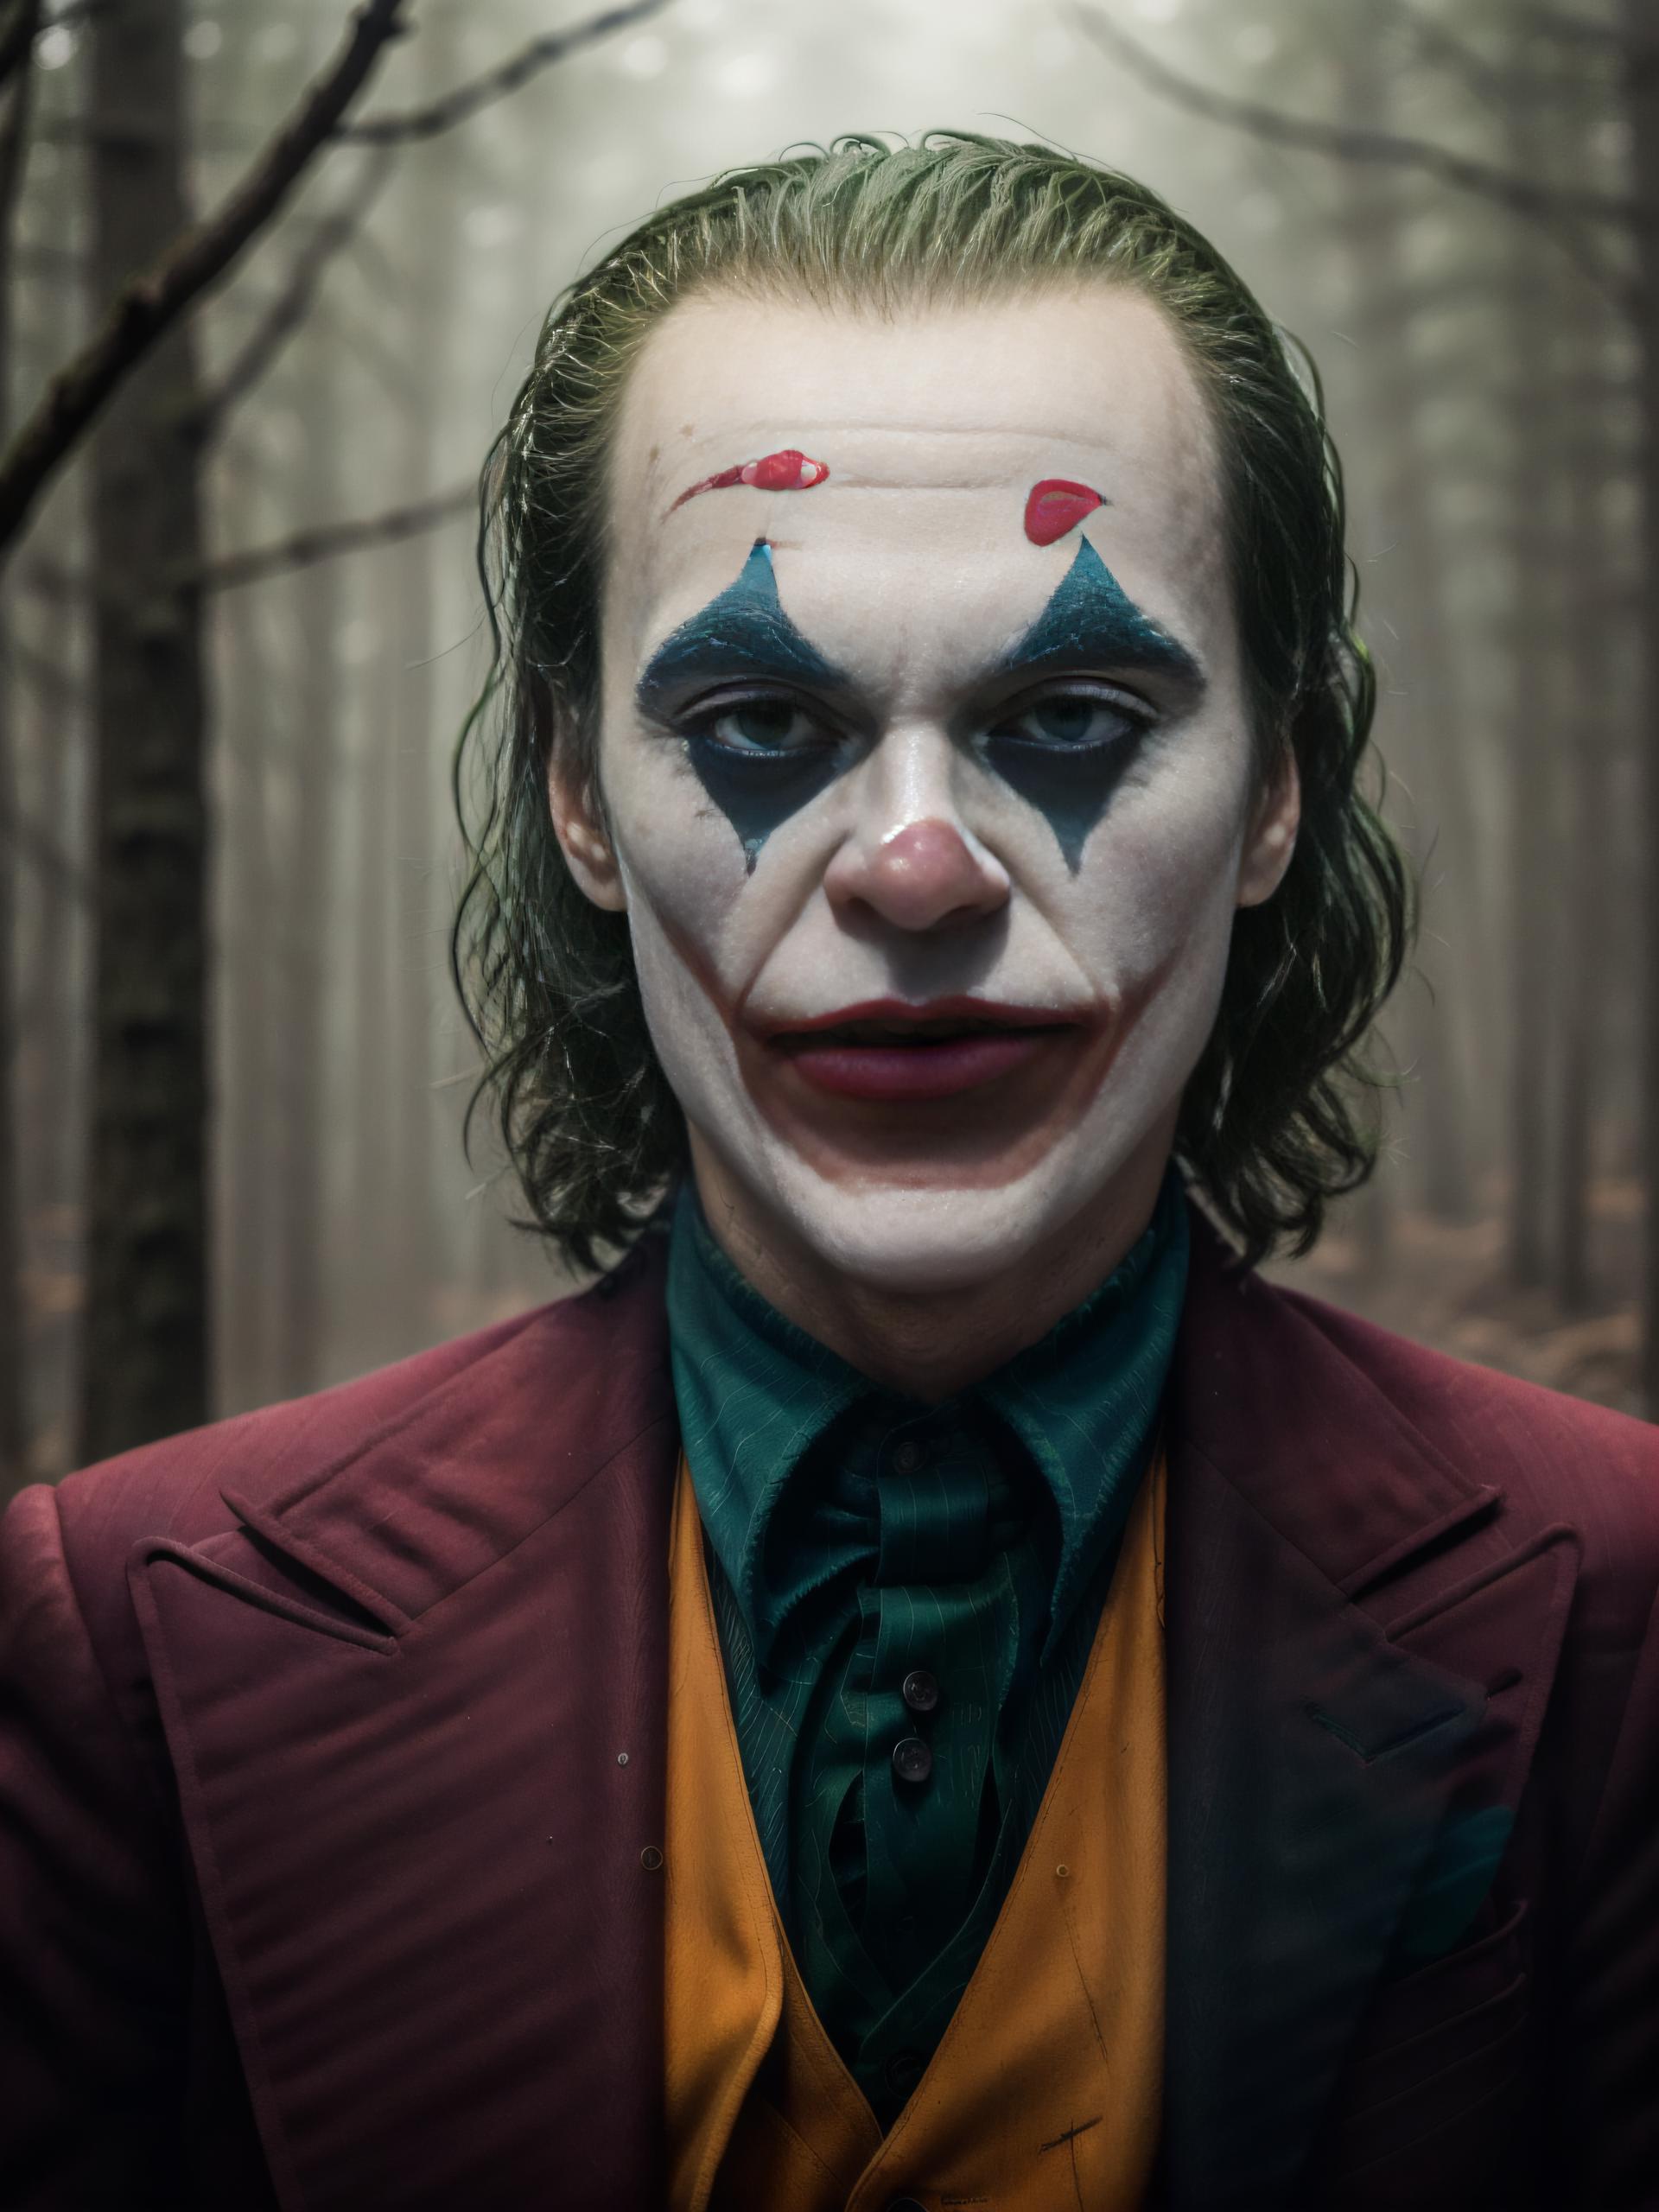 The Joker | Photorealistic Joker LoRa image by Jannix